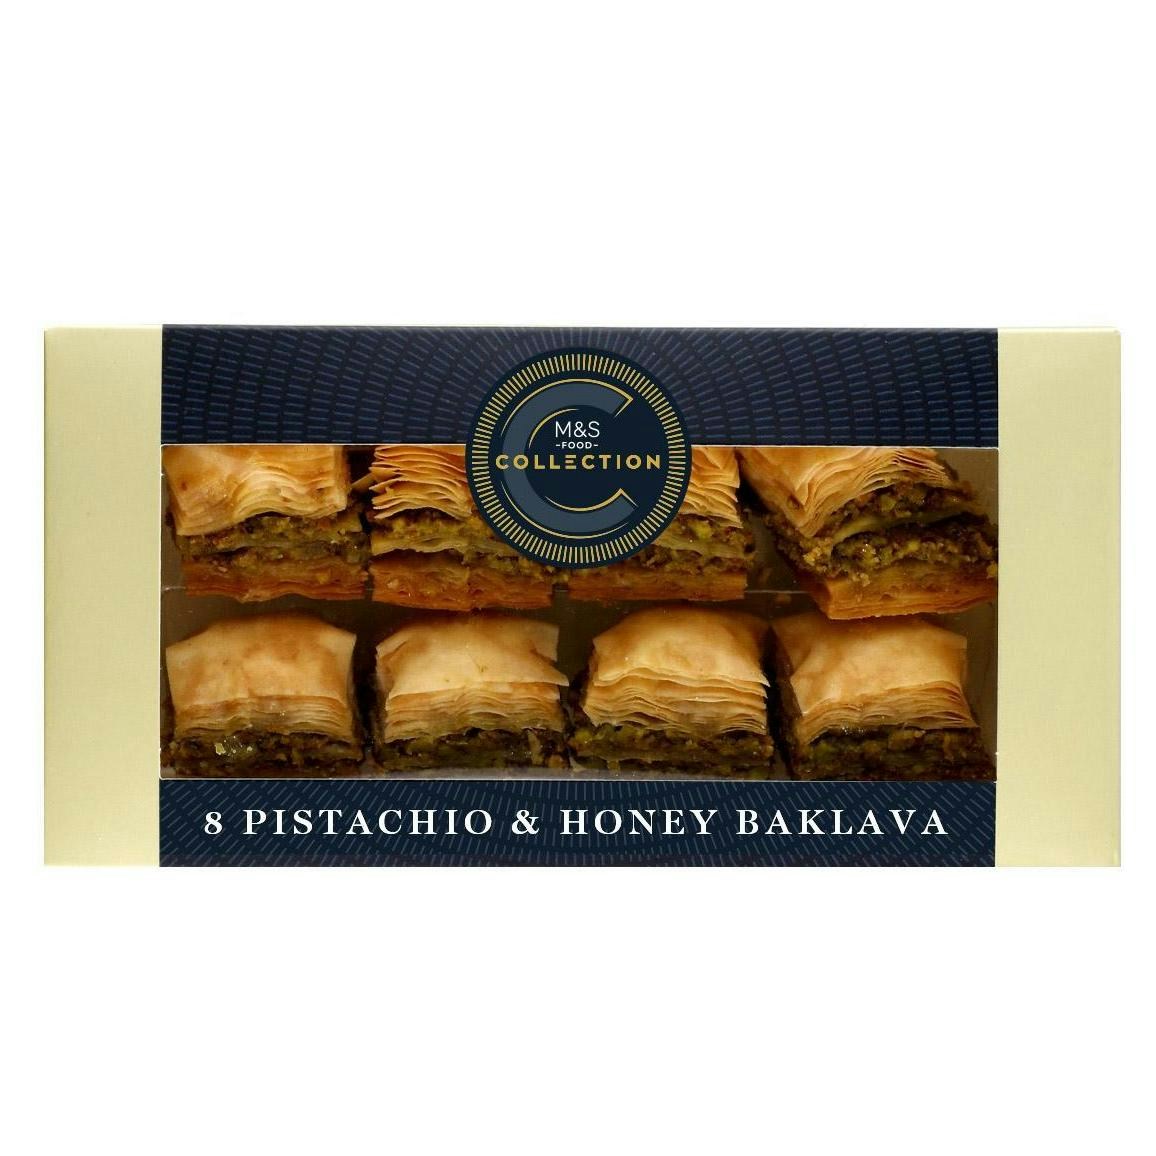 M&S Pistachio & Honey Baklava, £7